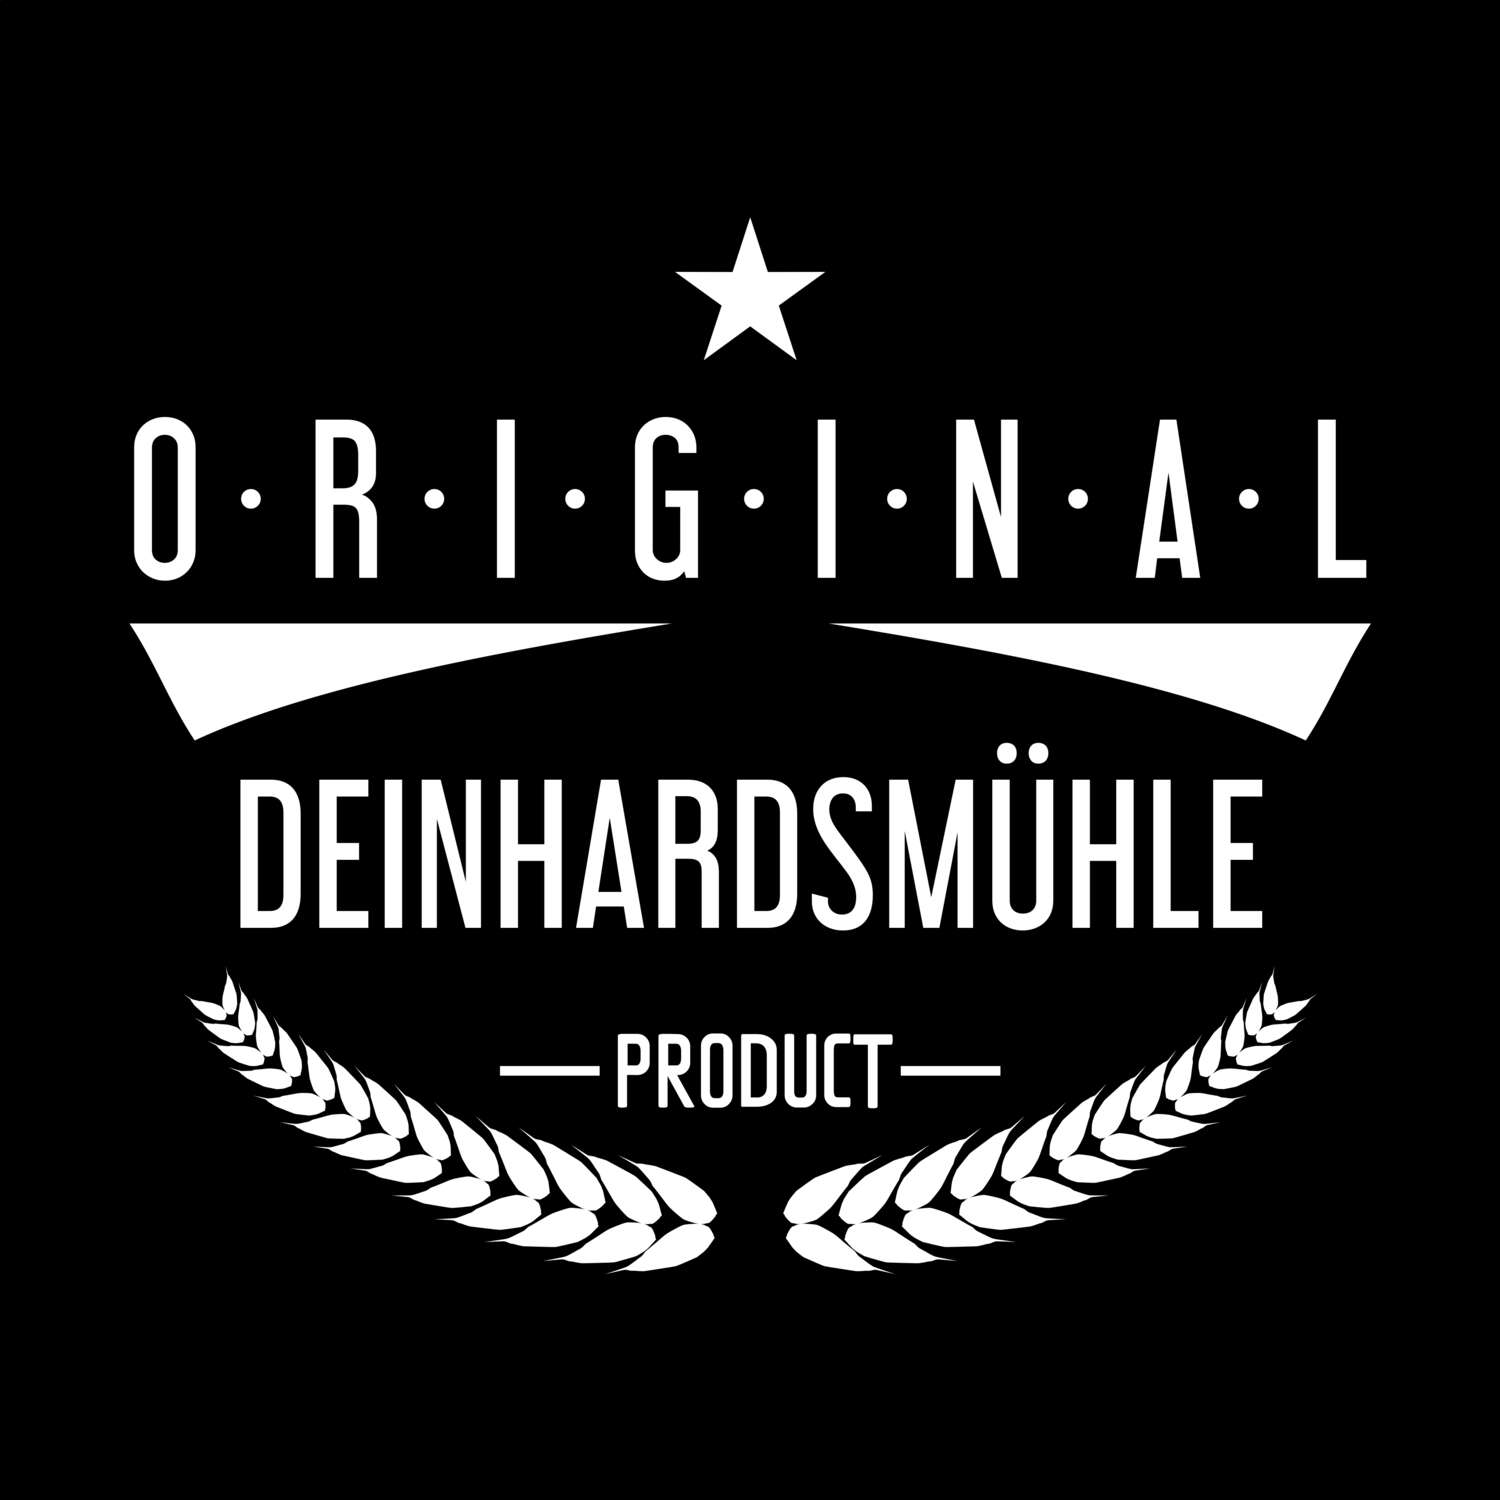 Deinhardsmühle T-Shirt »Original Product«